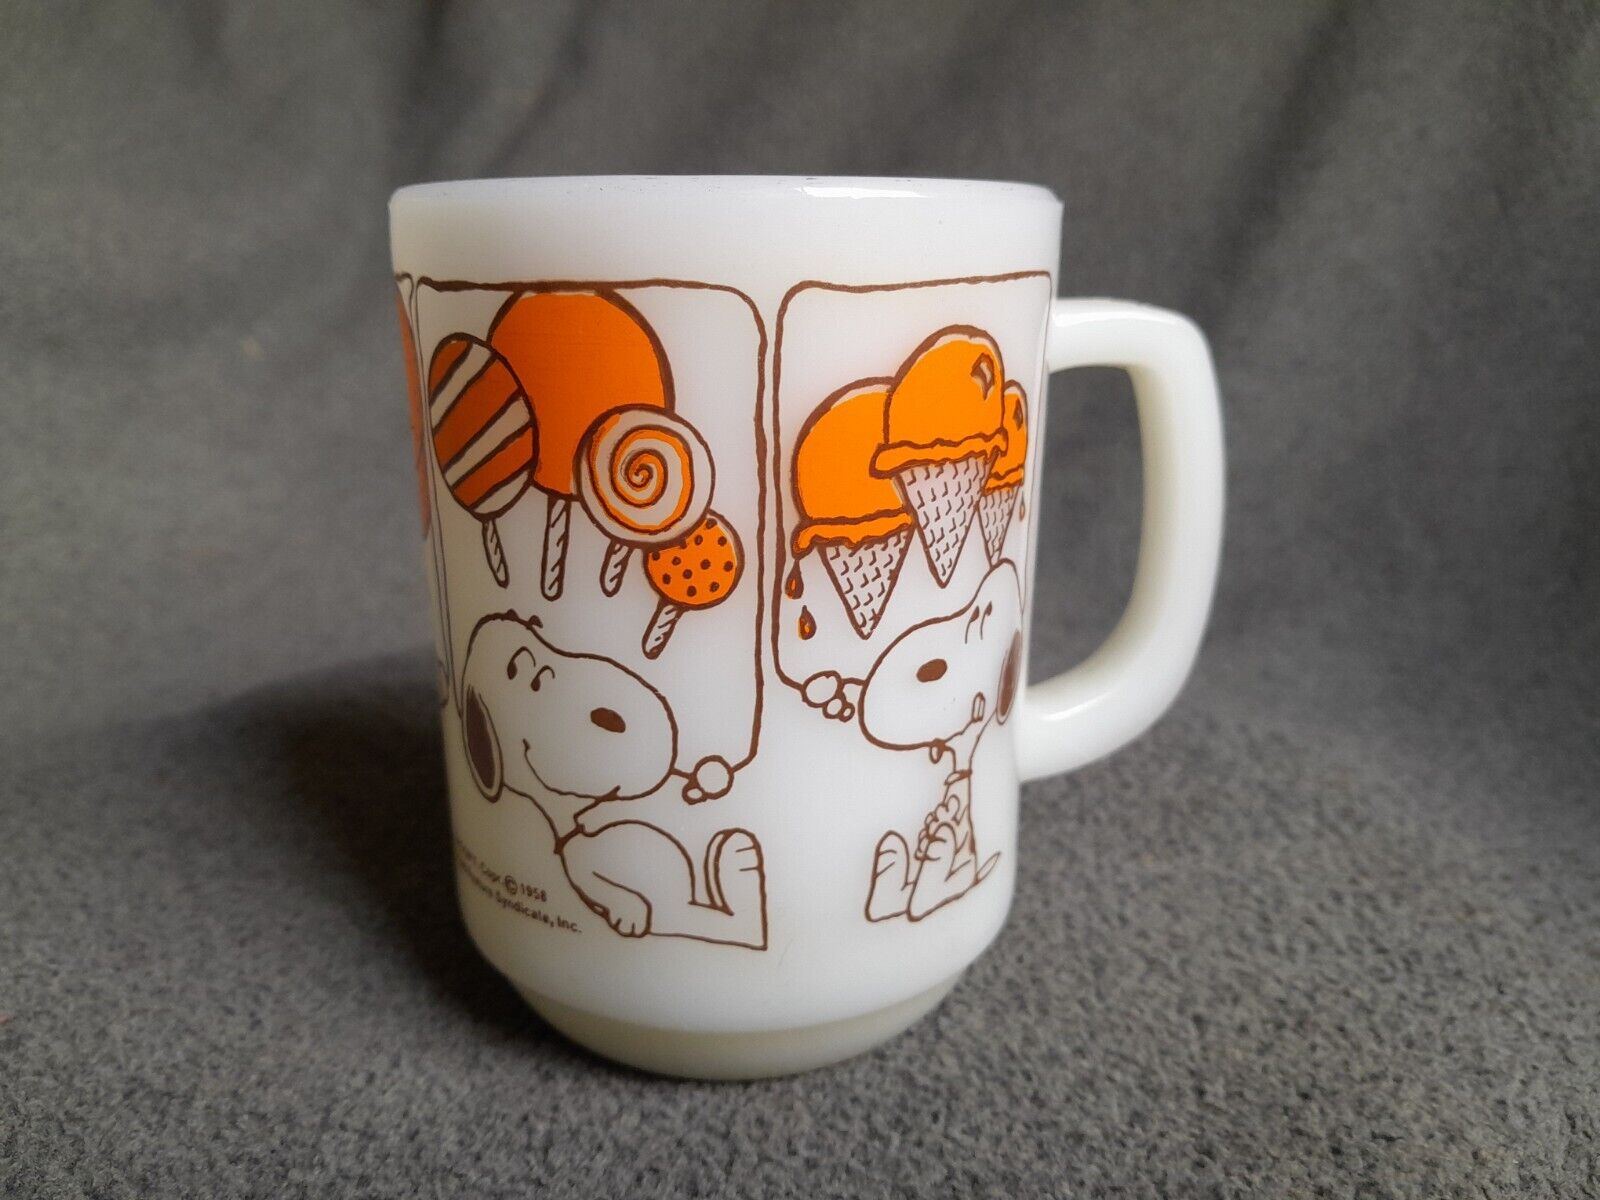 Vintage 1958 Snoopy Fire King Cup Mug Milk Glass Sweet Dreams White/Orange